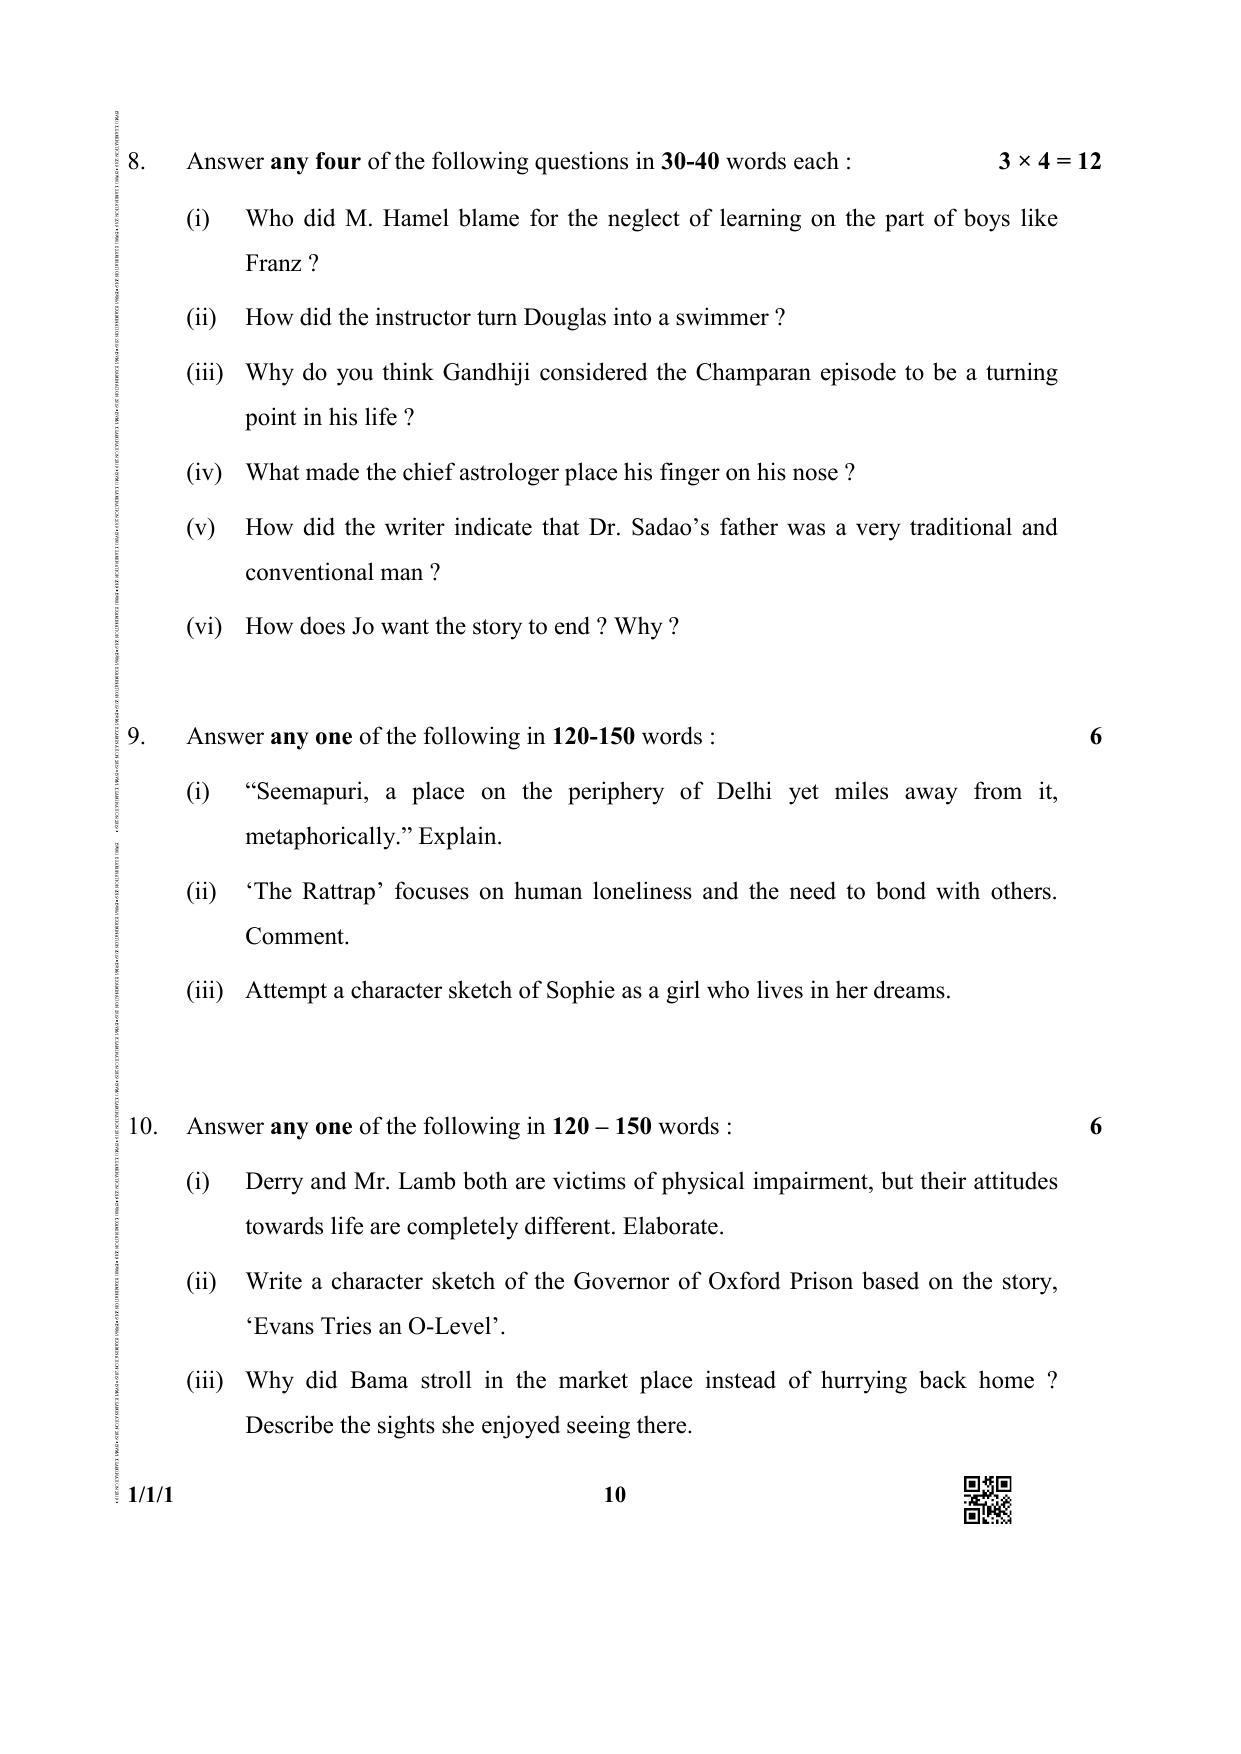 CBSE Class 12 1-1-1 (English Core) 2019 Question Paper - Page 10